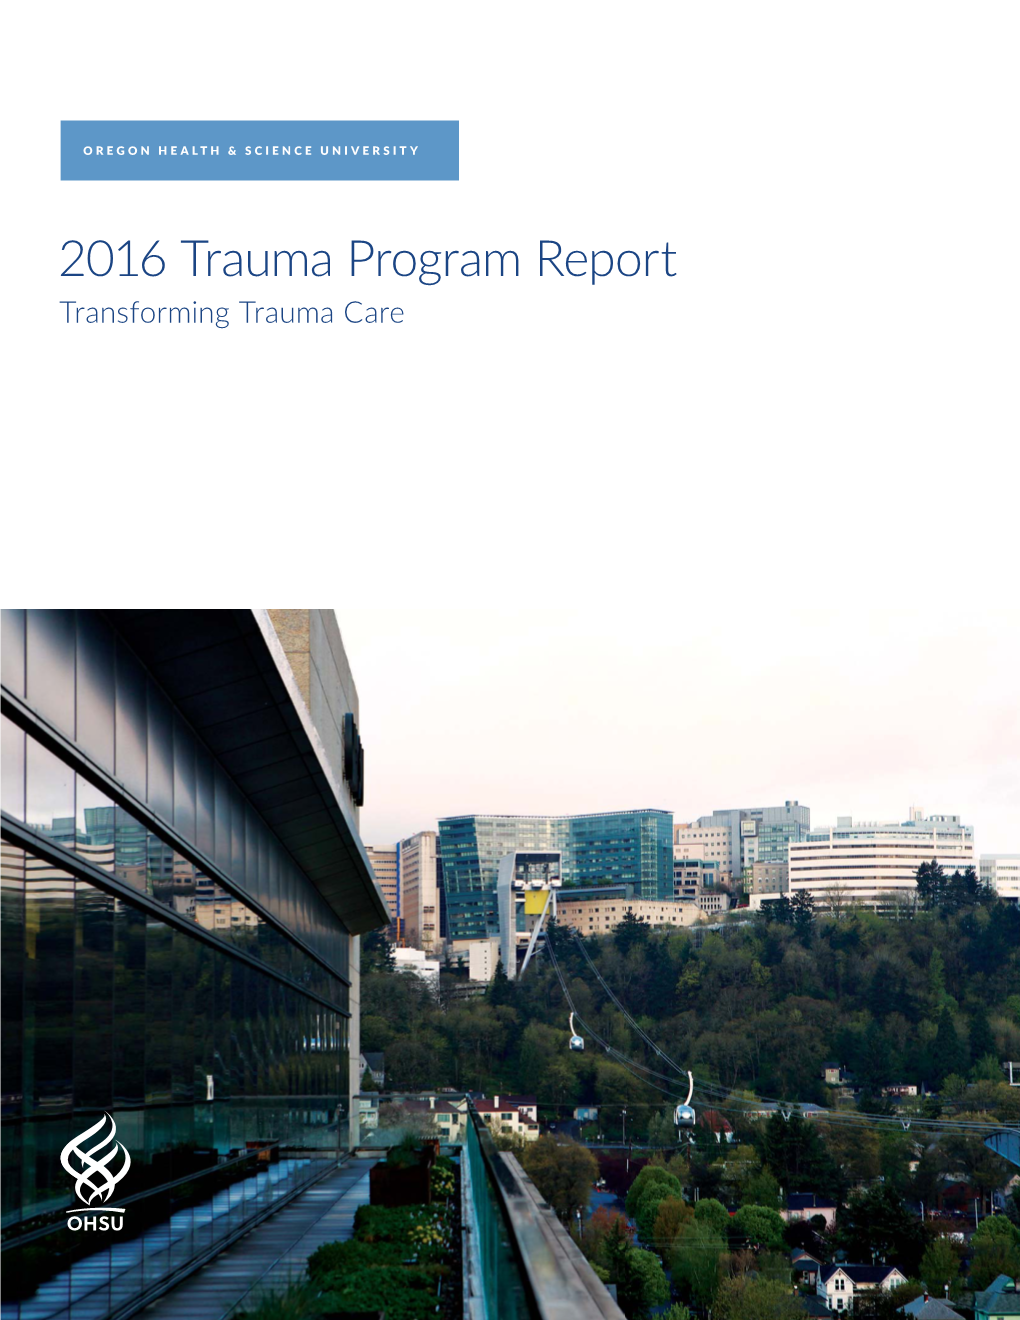 2016 Annual Trauma Program Report